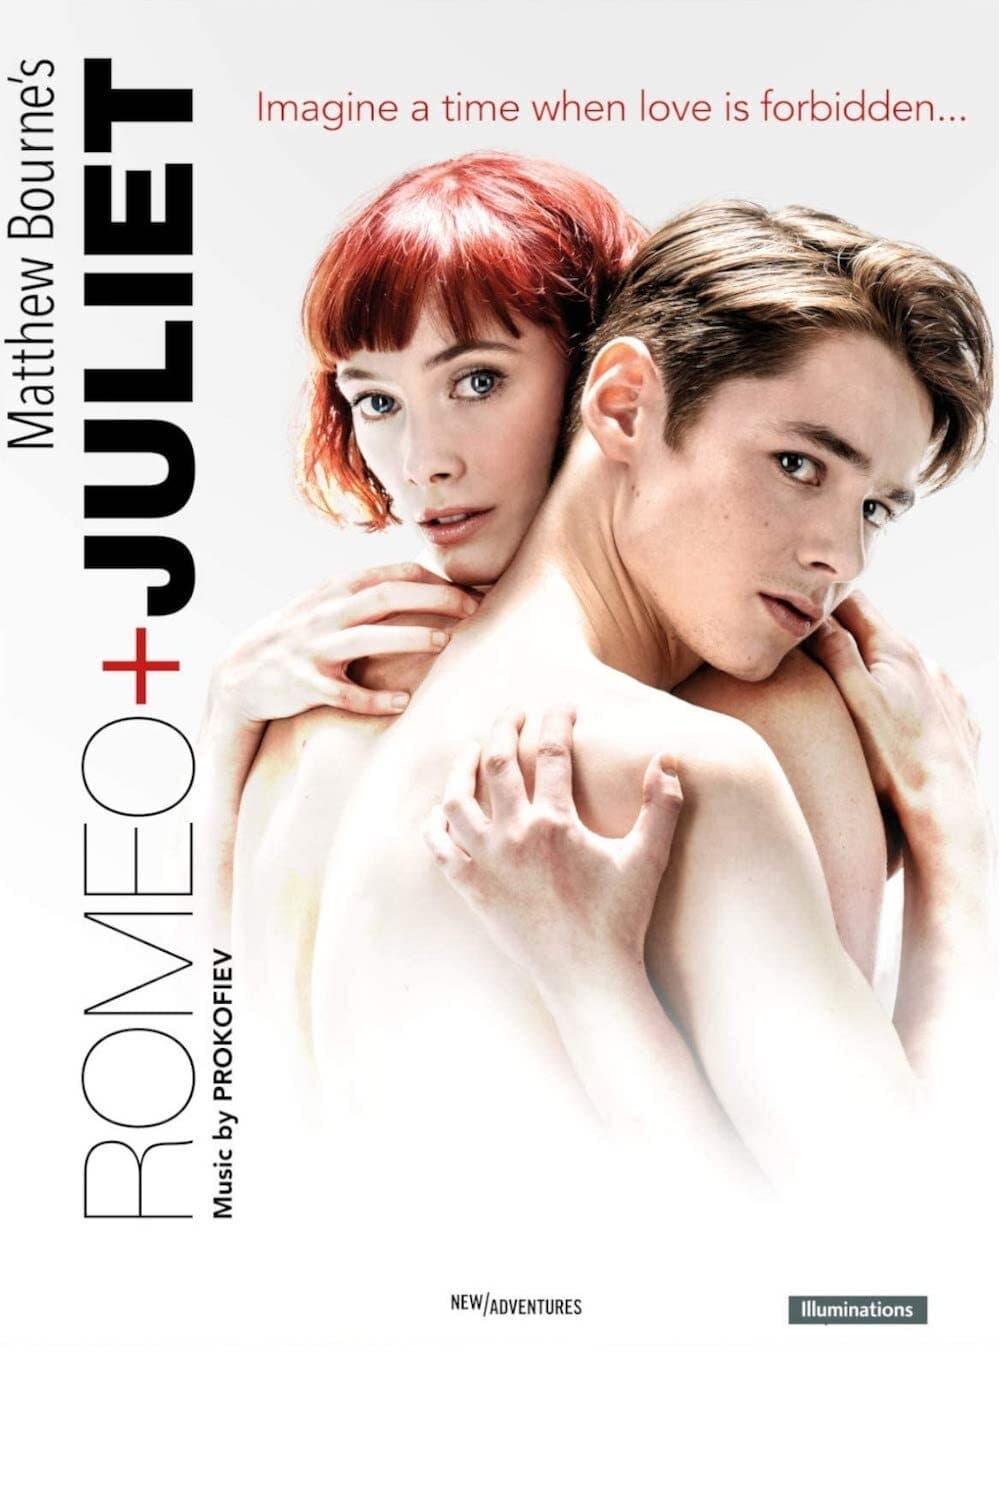 Matthew Bourne's Romeo + Juliet poster